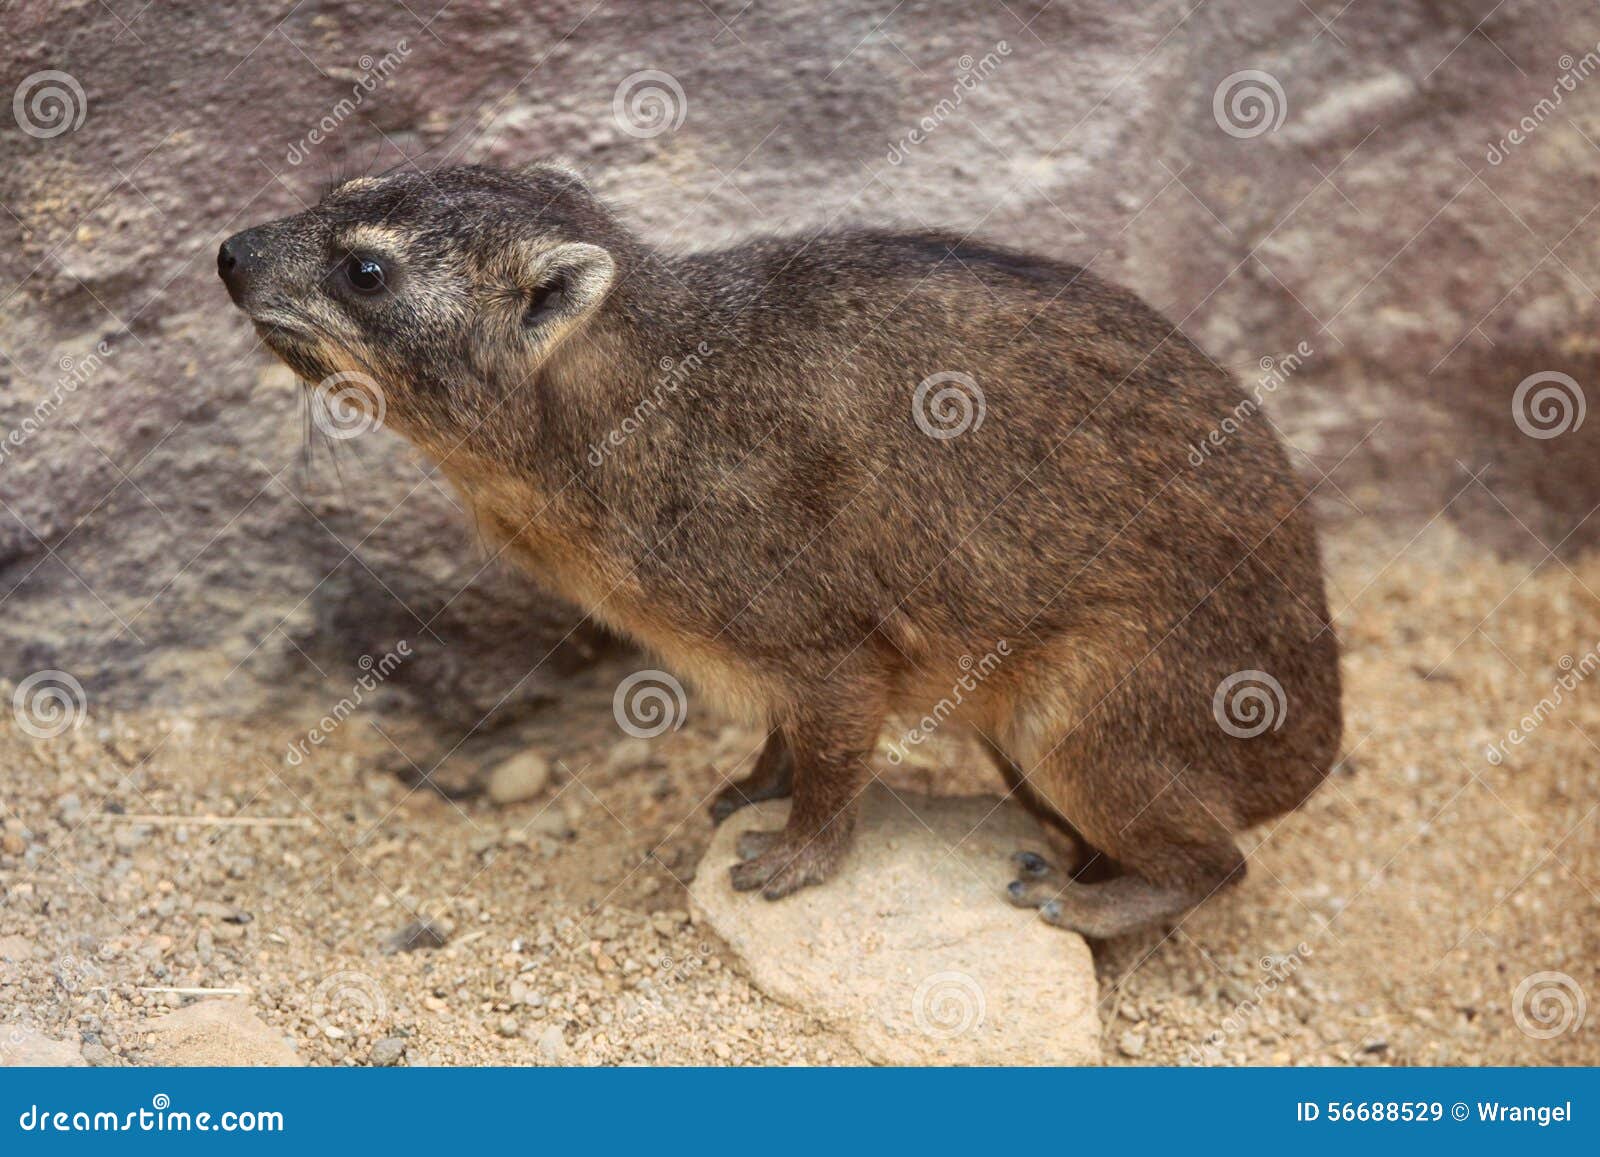 rock hyrax (procavia capensis).